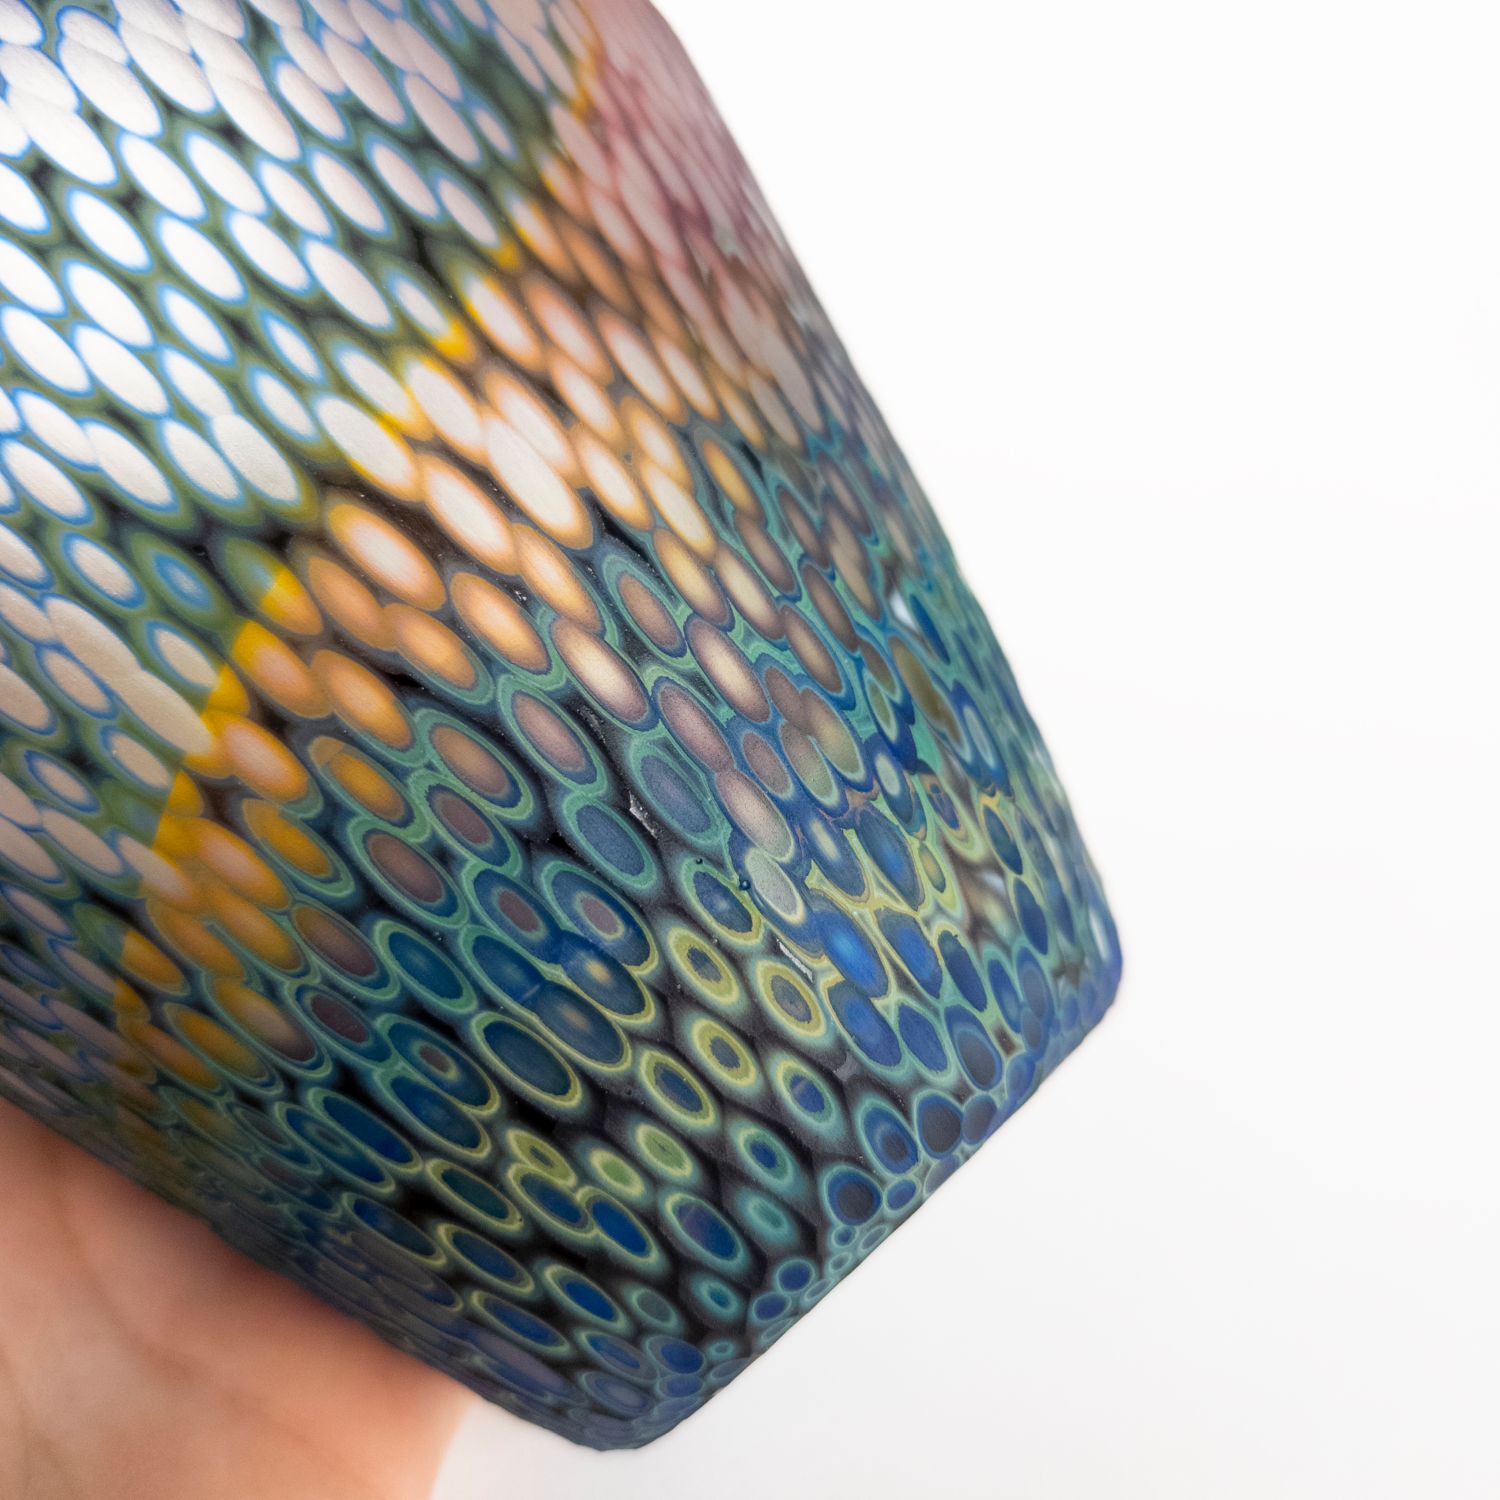 Sydni Weatherson: Spring Garden – Glass Vase Product Image 3 of 8